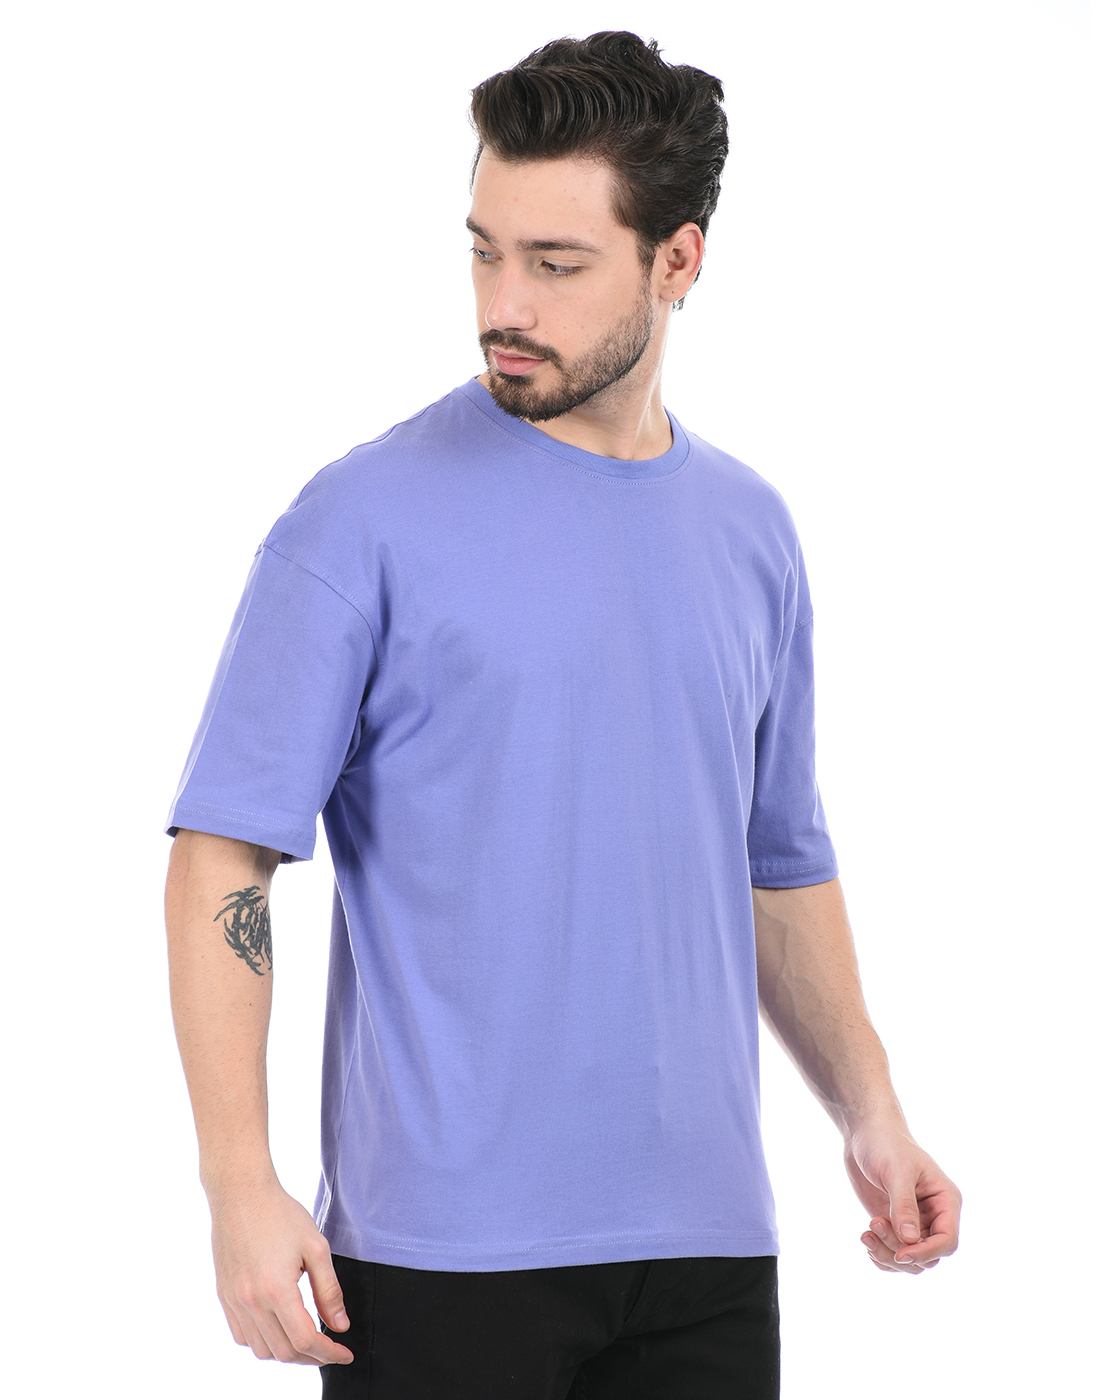 Oneway Unisex Solid Purple T-Shirt